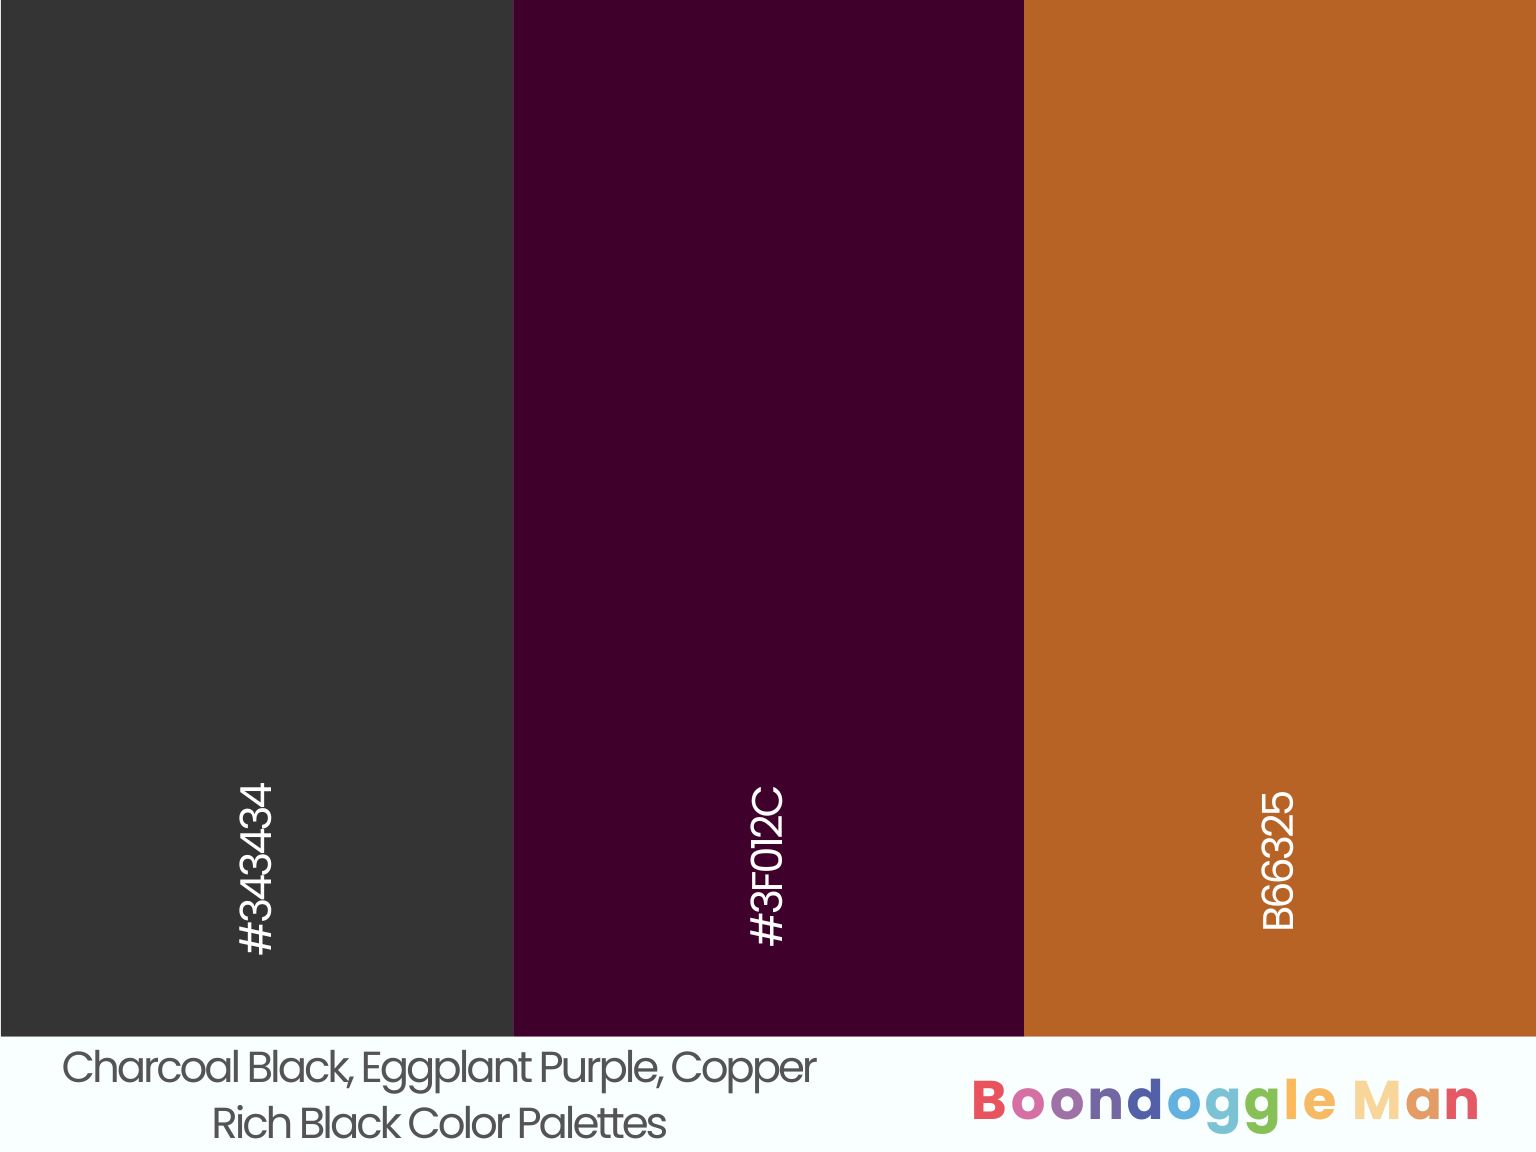 Charcoal Black, Eggplant Purple, Copper